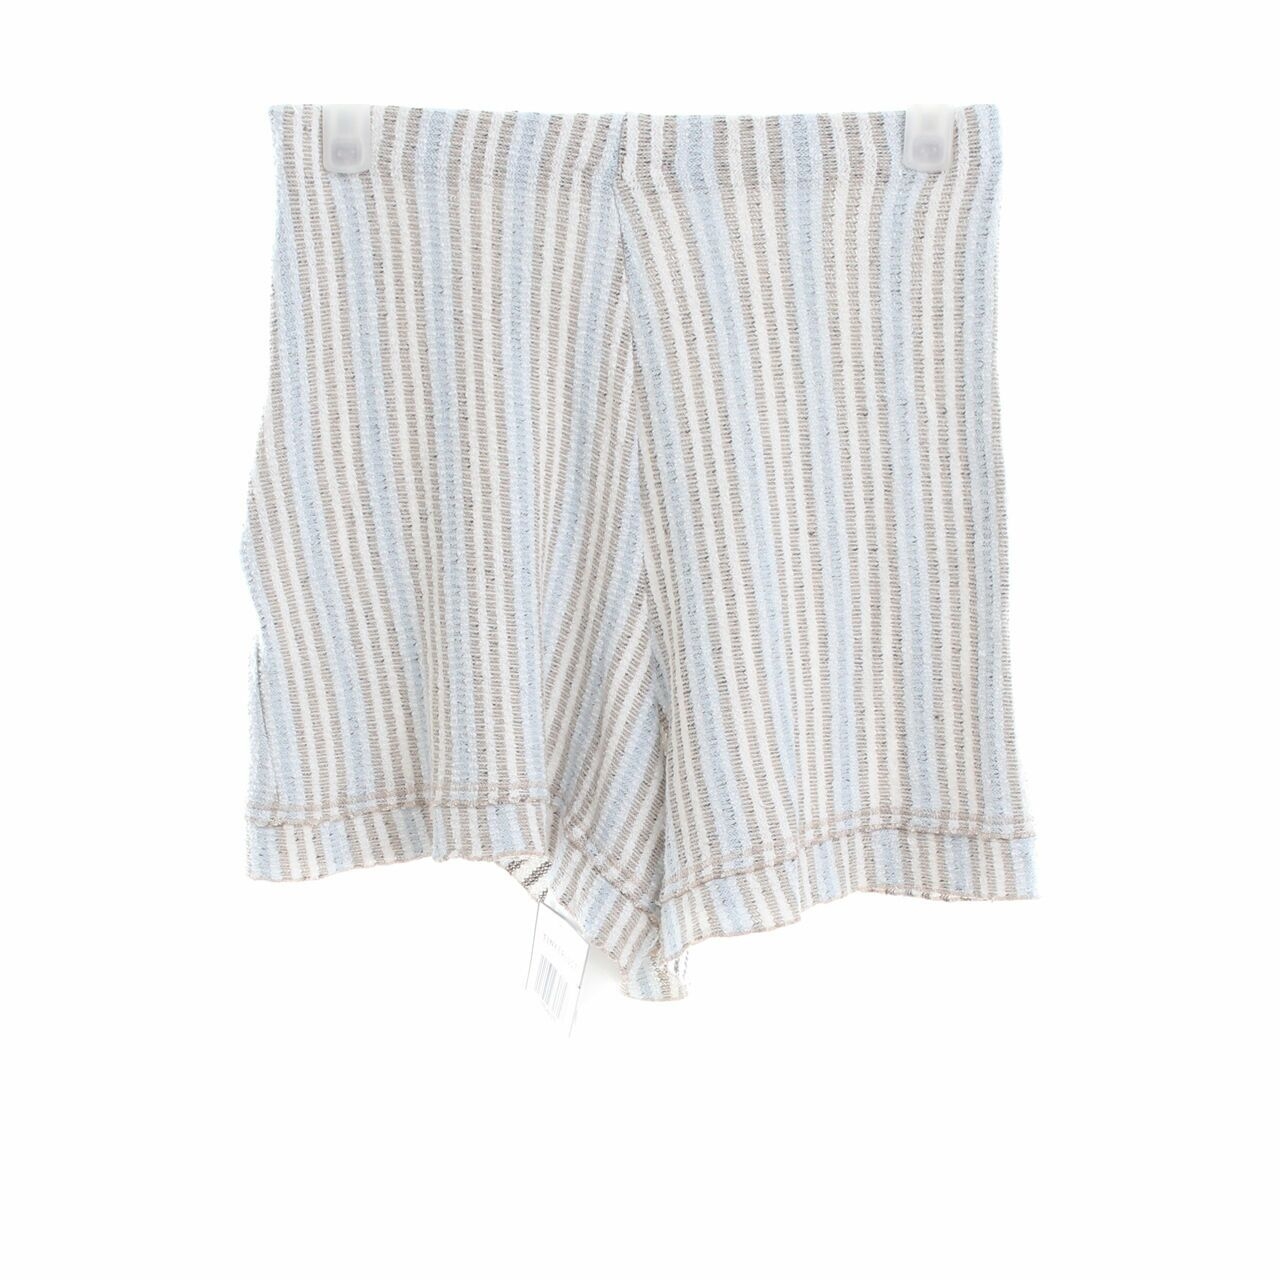 Zara Multi Stripes Short Pants